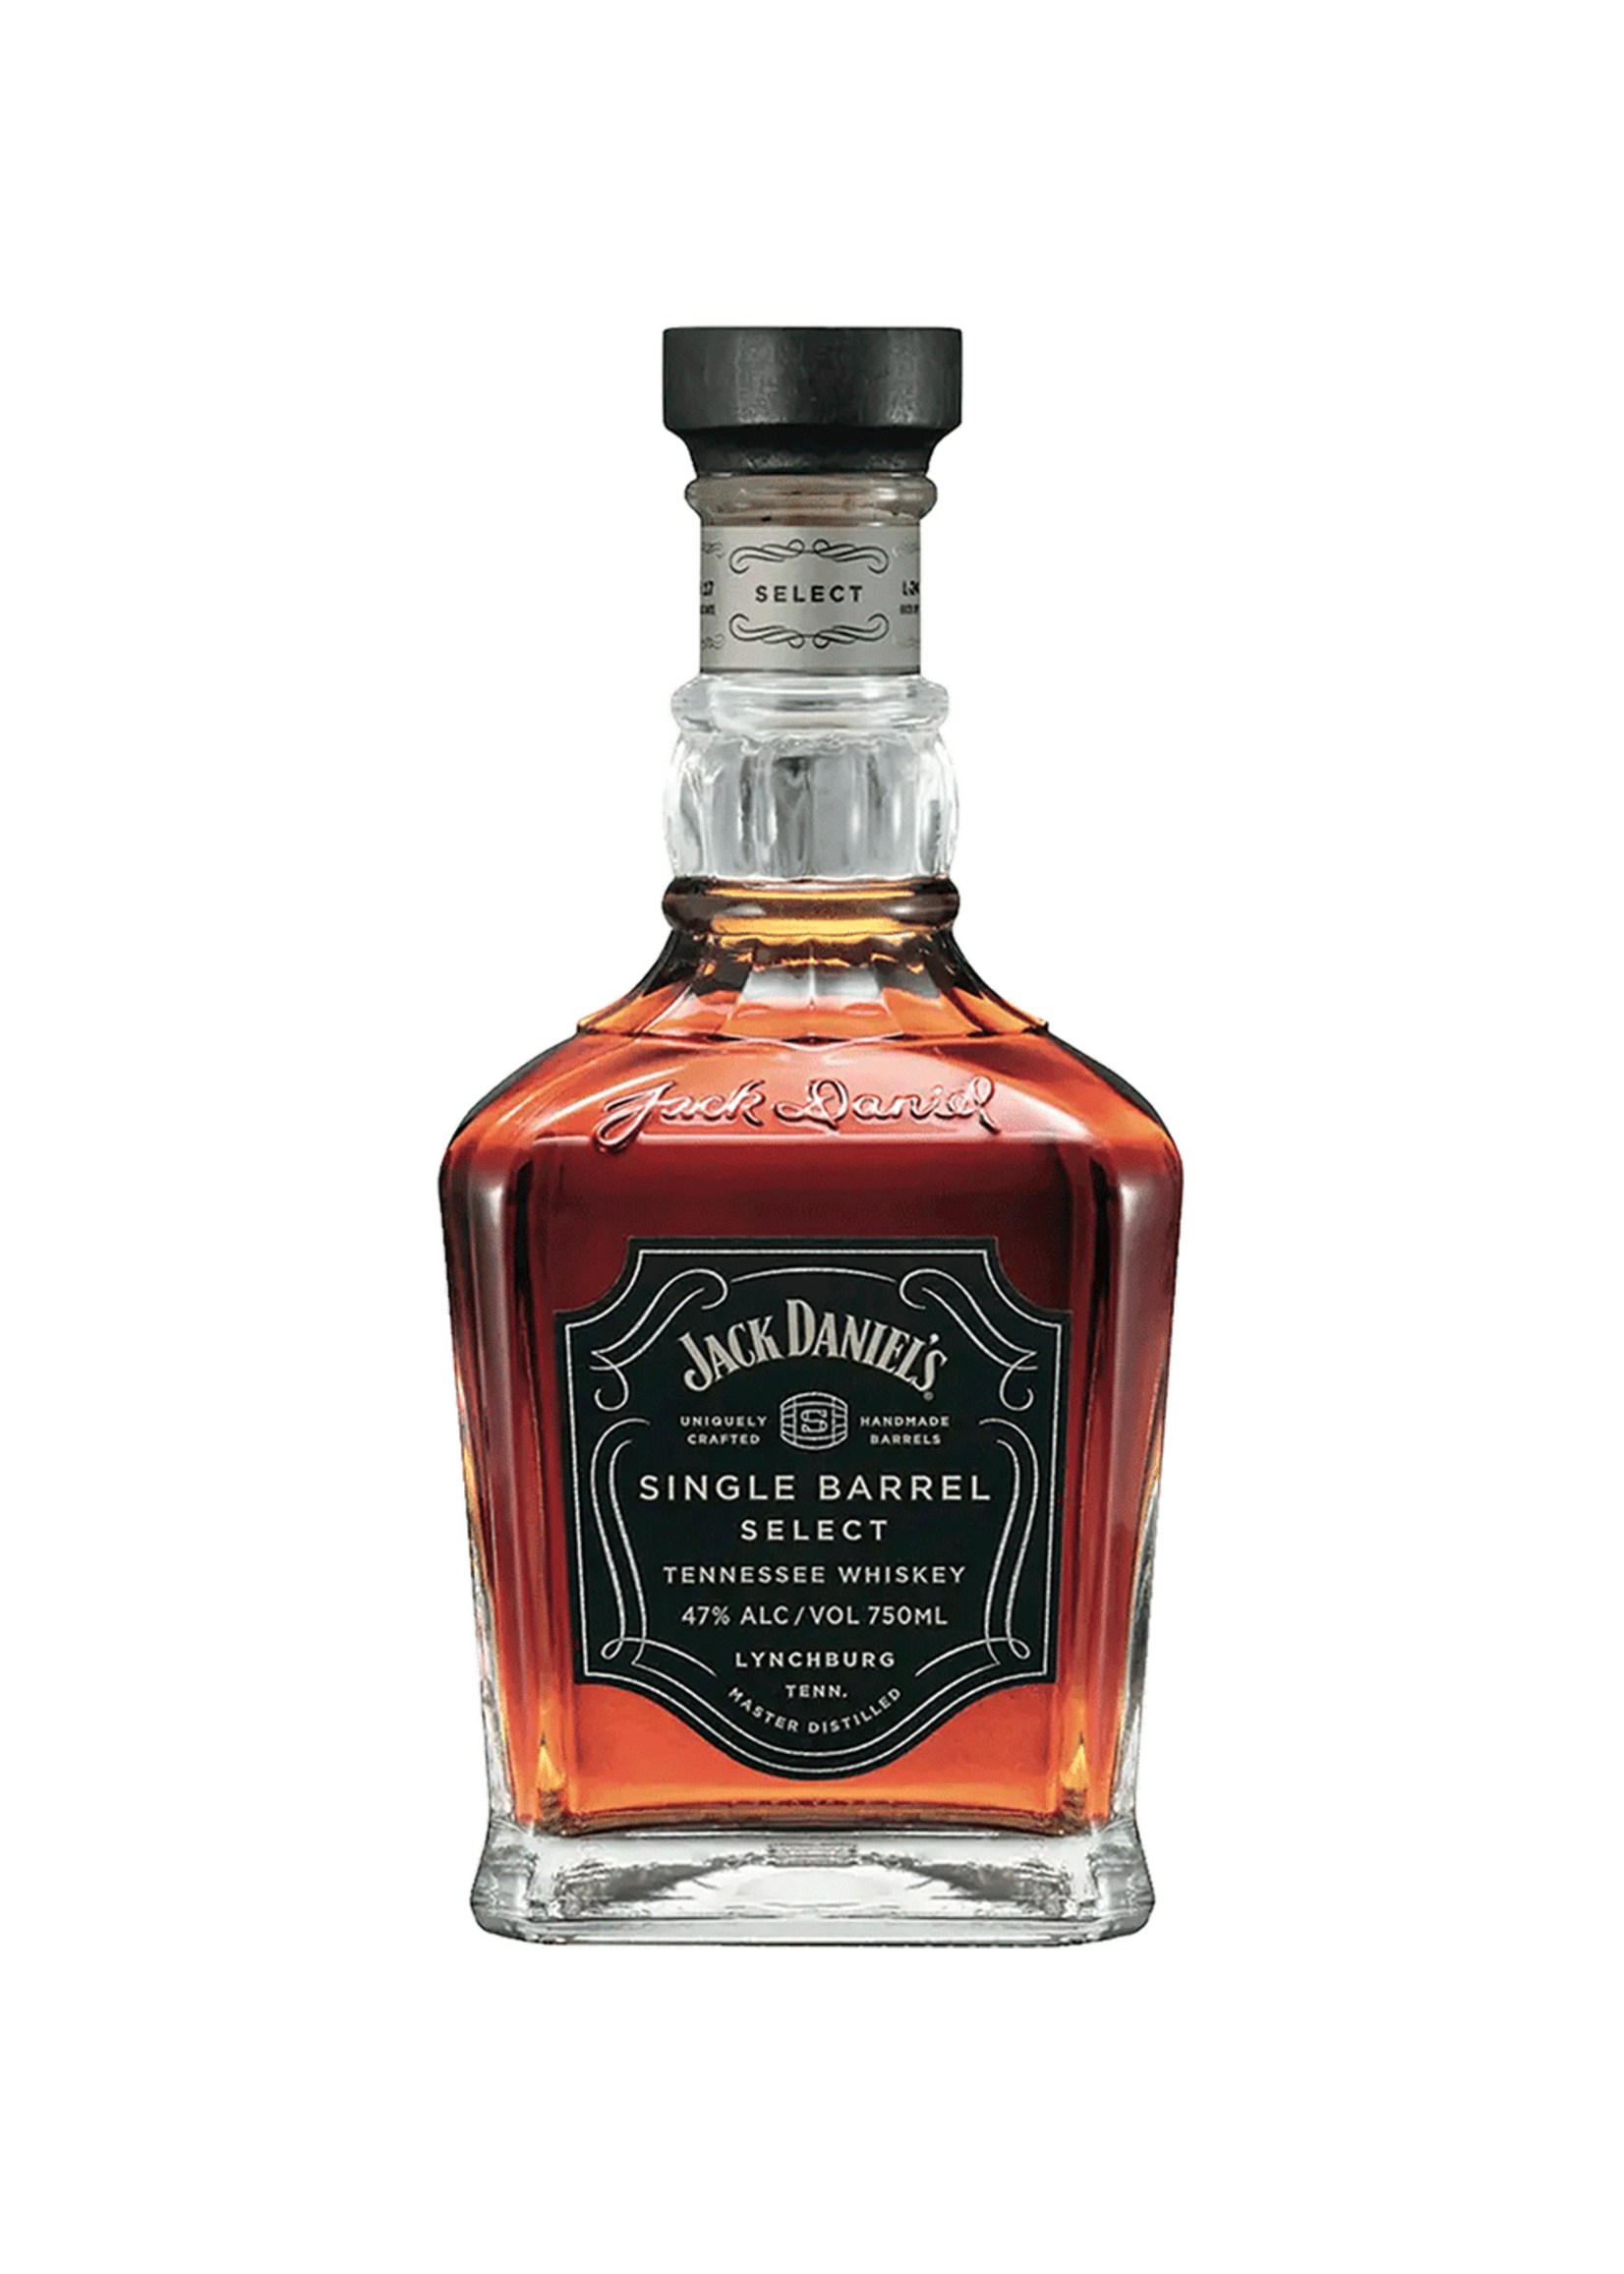 Jack Daniels Jack Daniel's Single Barrel Select Tennessee Whiskey 80Proof 750ml